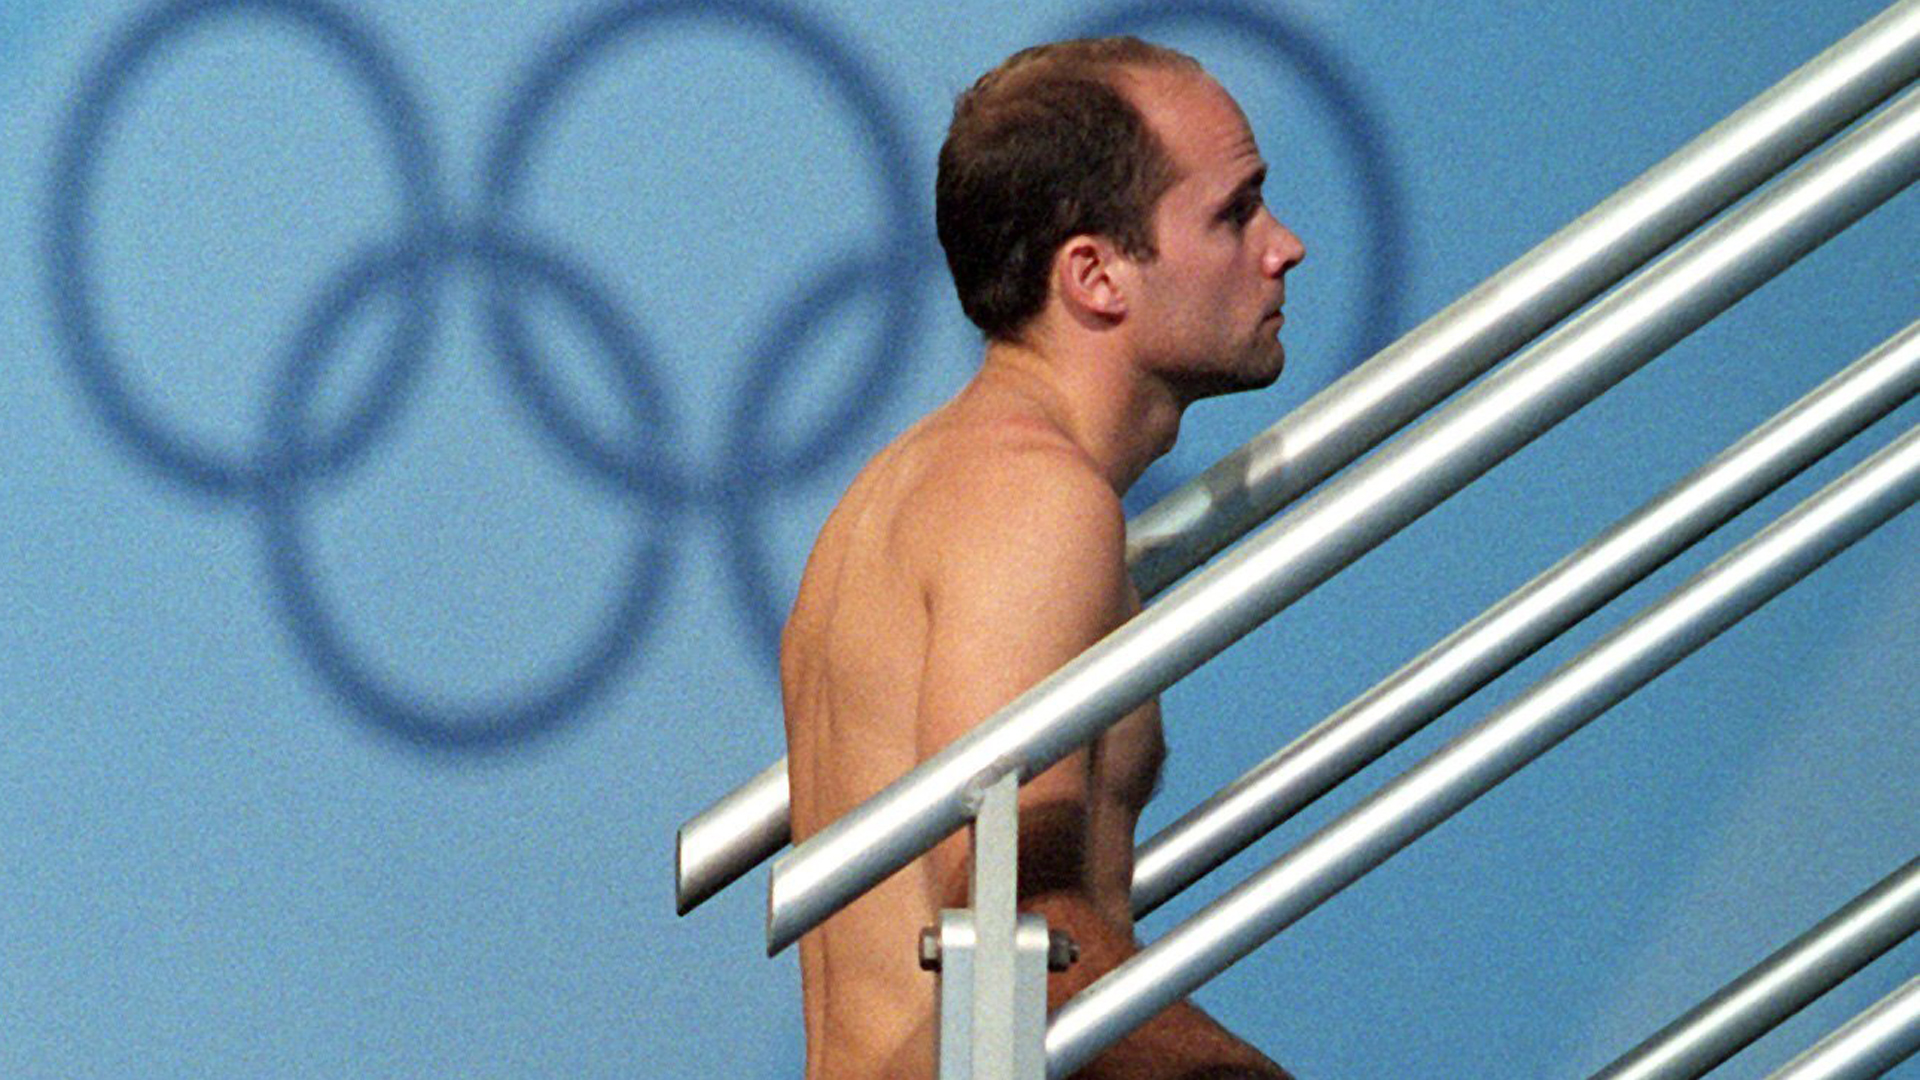 Wasserspringer Hempel bei Olympia 2000 in Sydney | picture-alliance / dpa